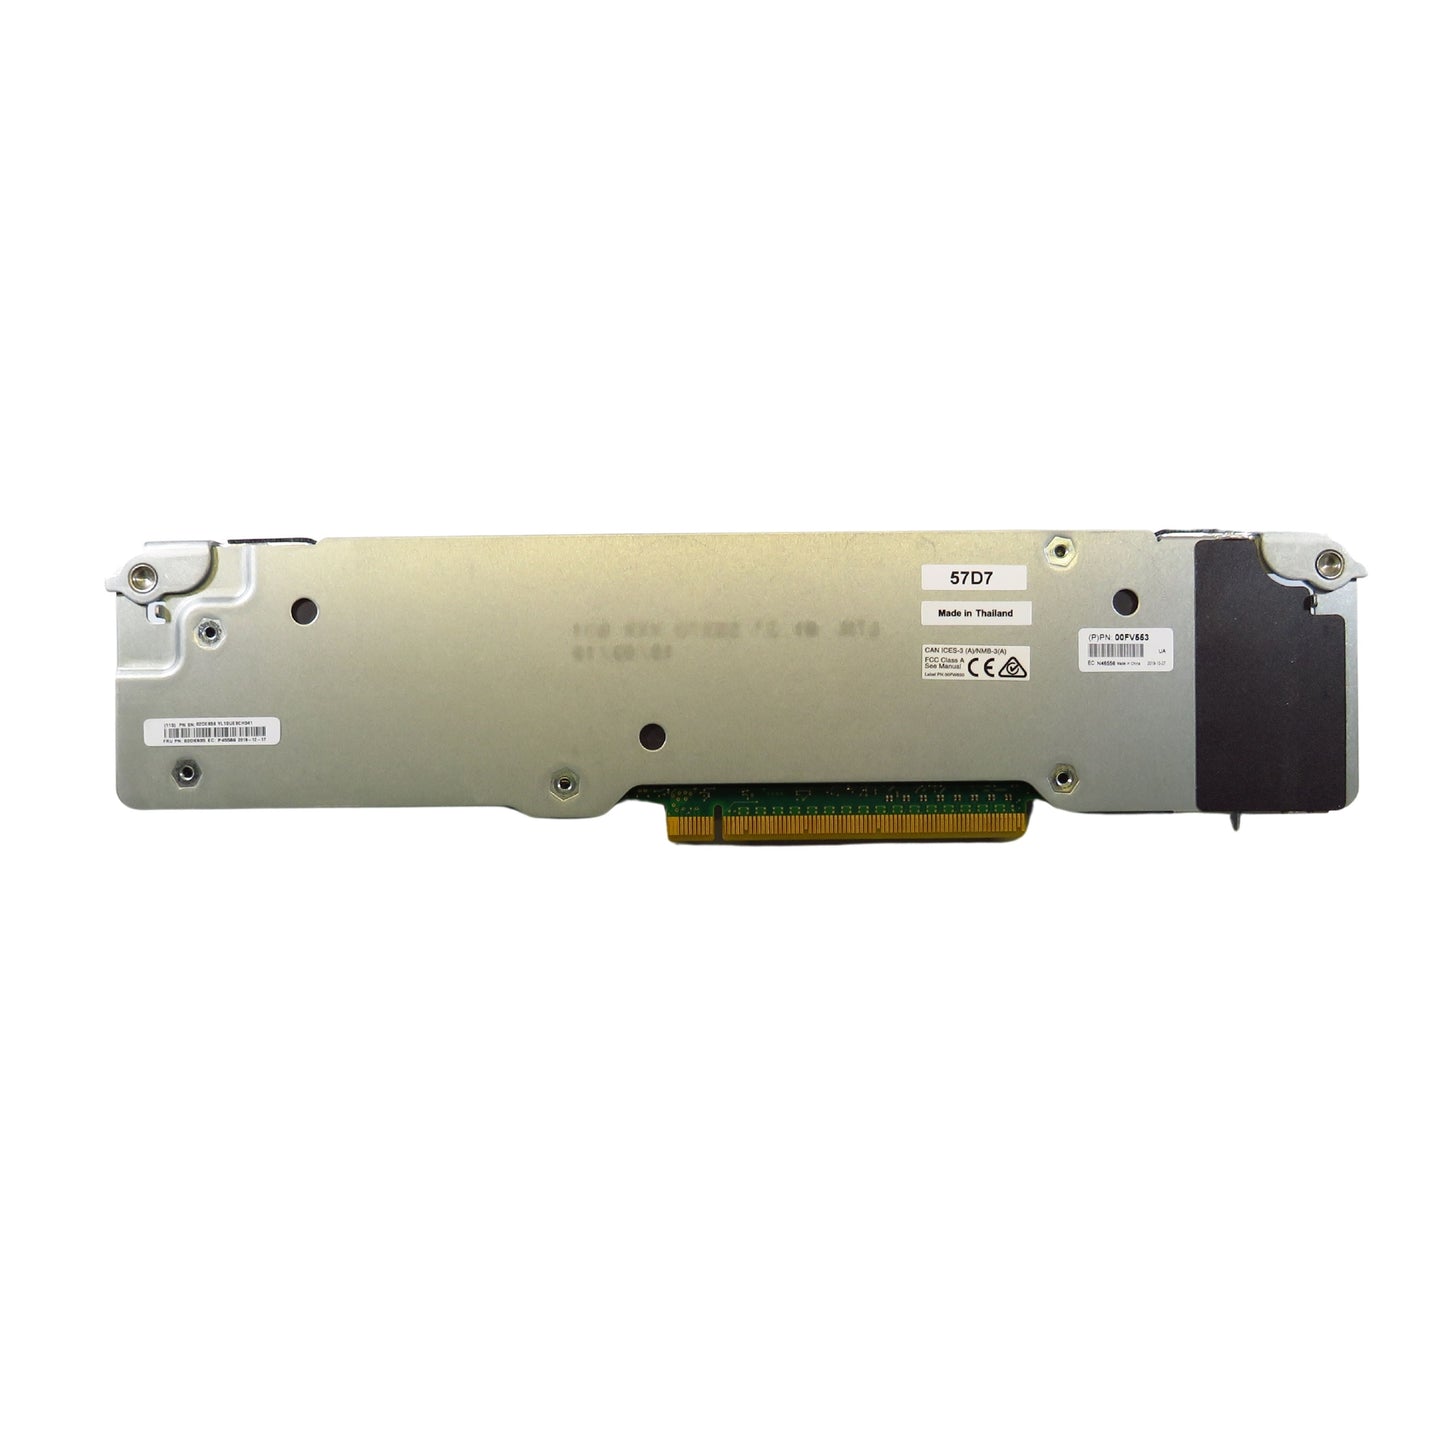 IBM 02DE935 57D7 6Gb PCIe3 x8 SAS Controller for pSeries iSeries (Refurbished)